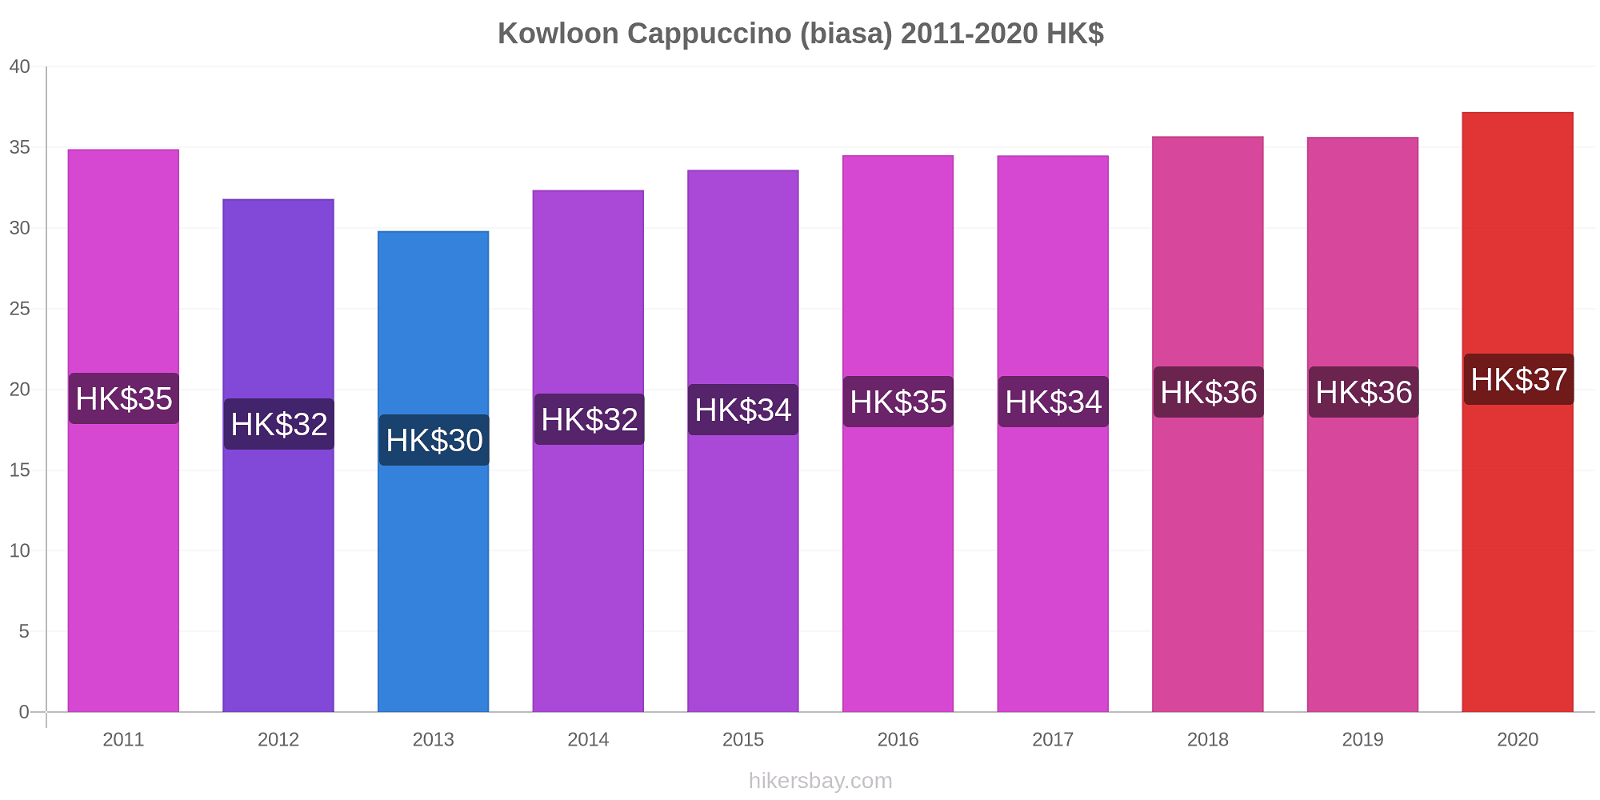 Kowloon perubahan harga Cappuccino (biasa) hikersbay.com